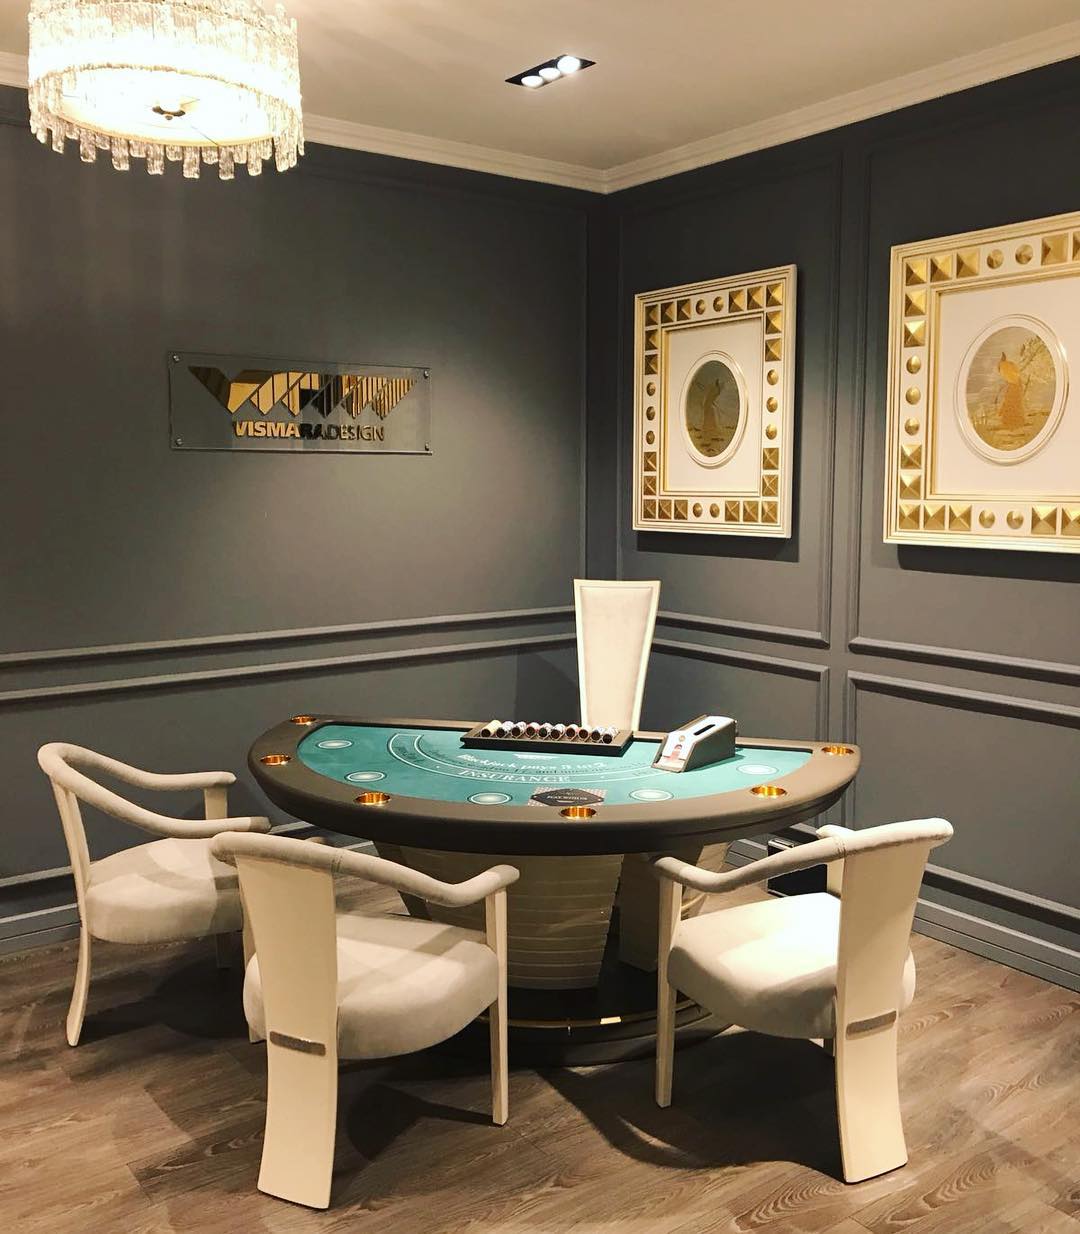 Poker table in grey game room. Photo by Instagram user @vismaradesignitaly